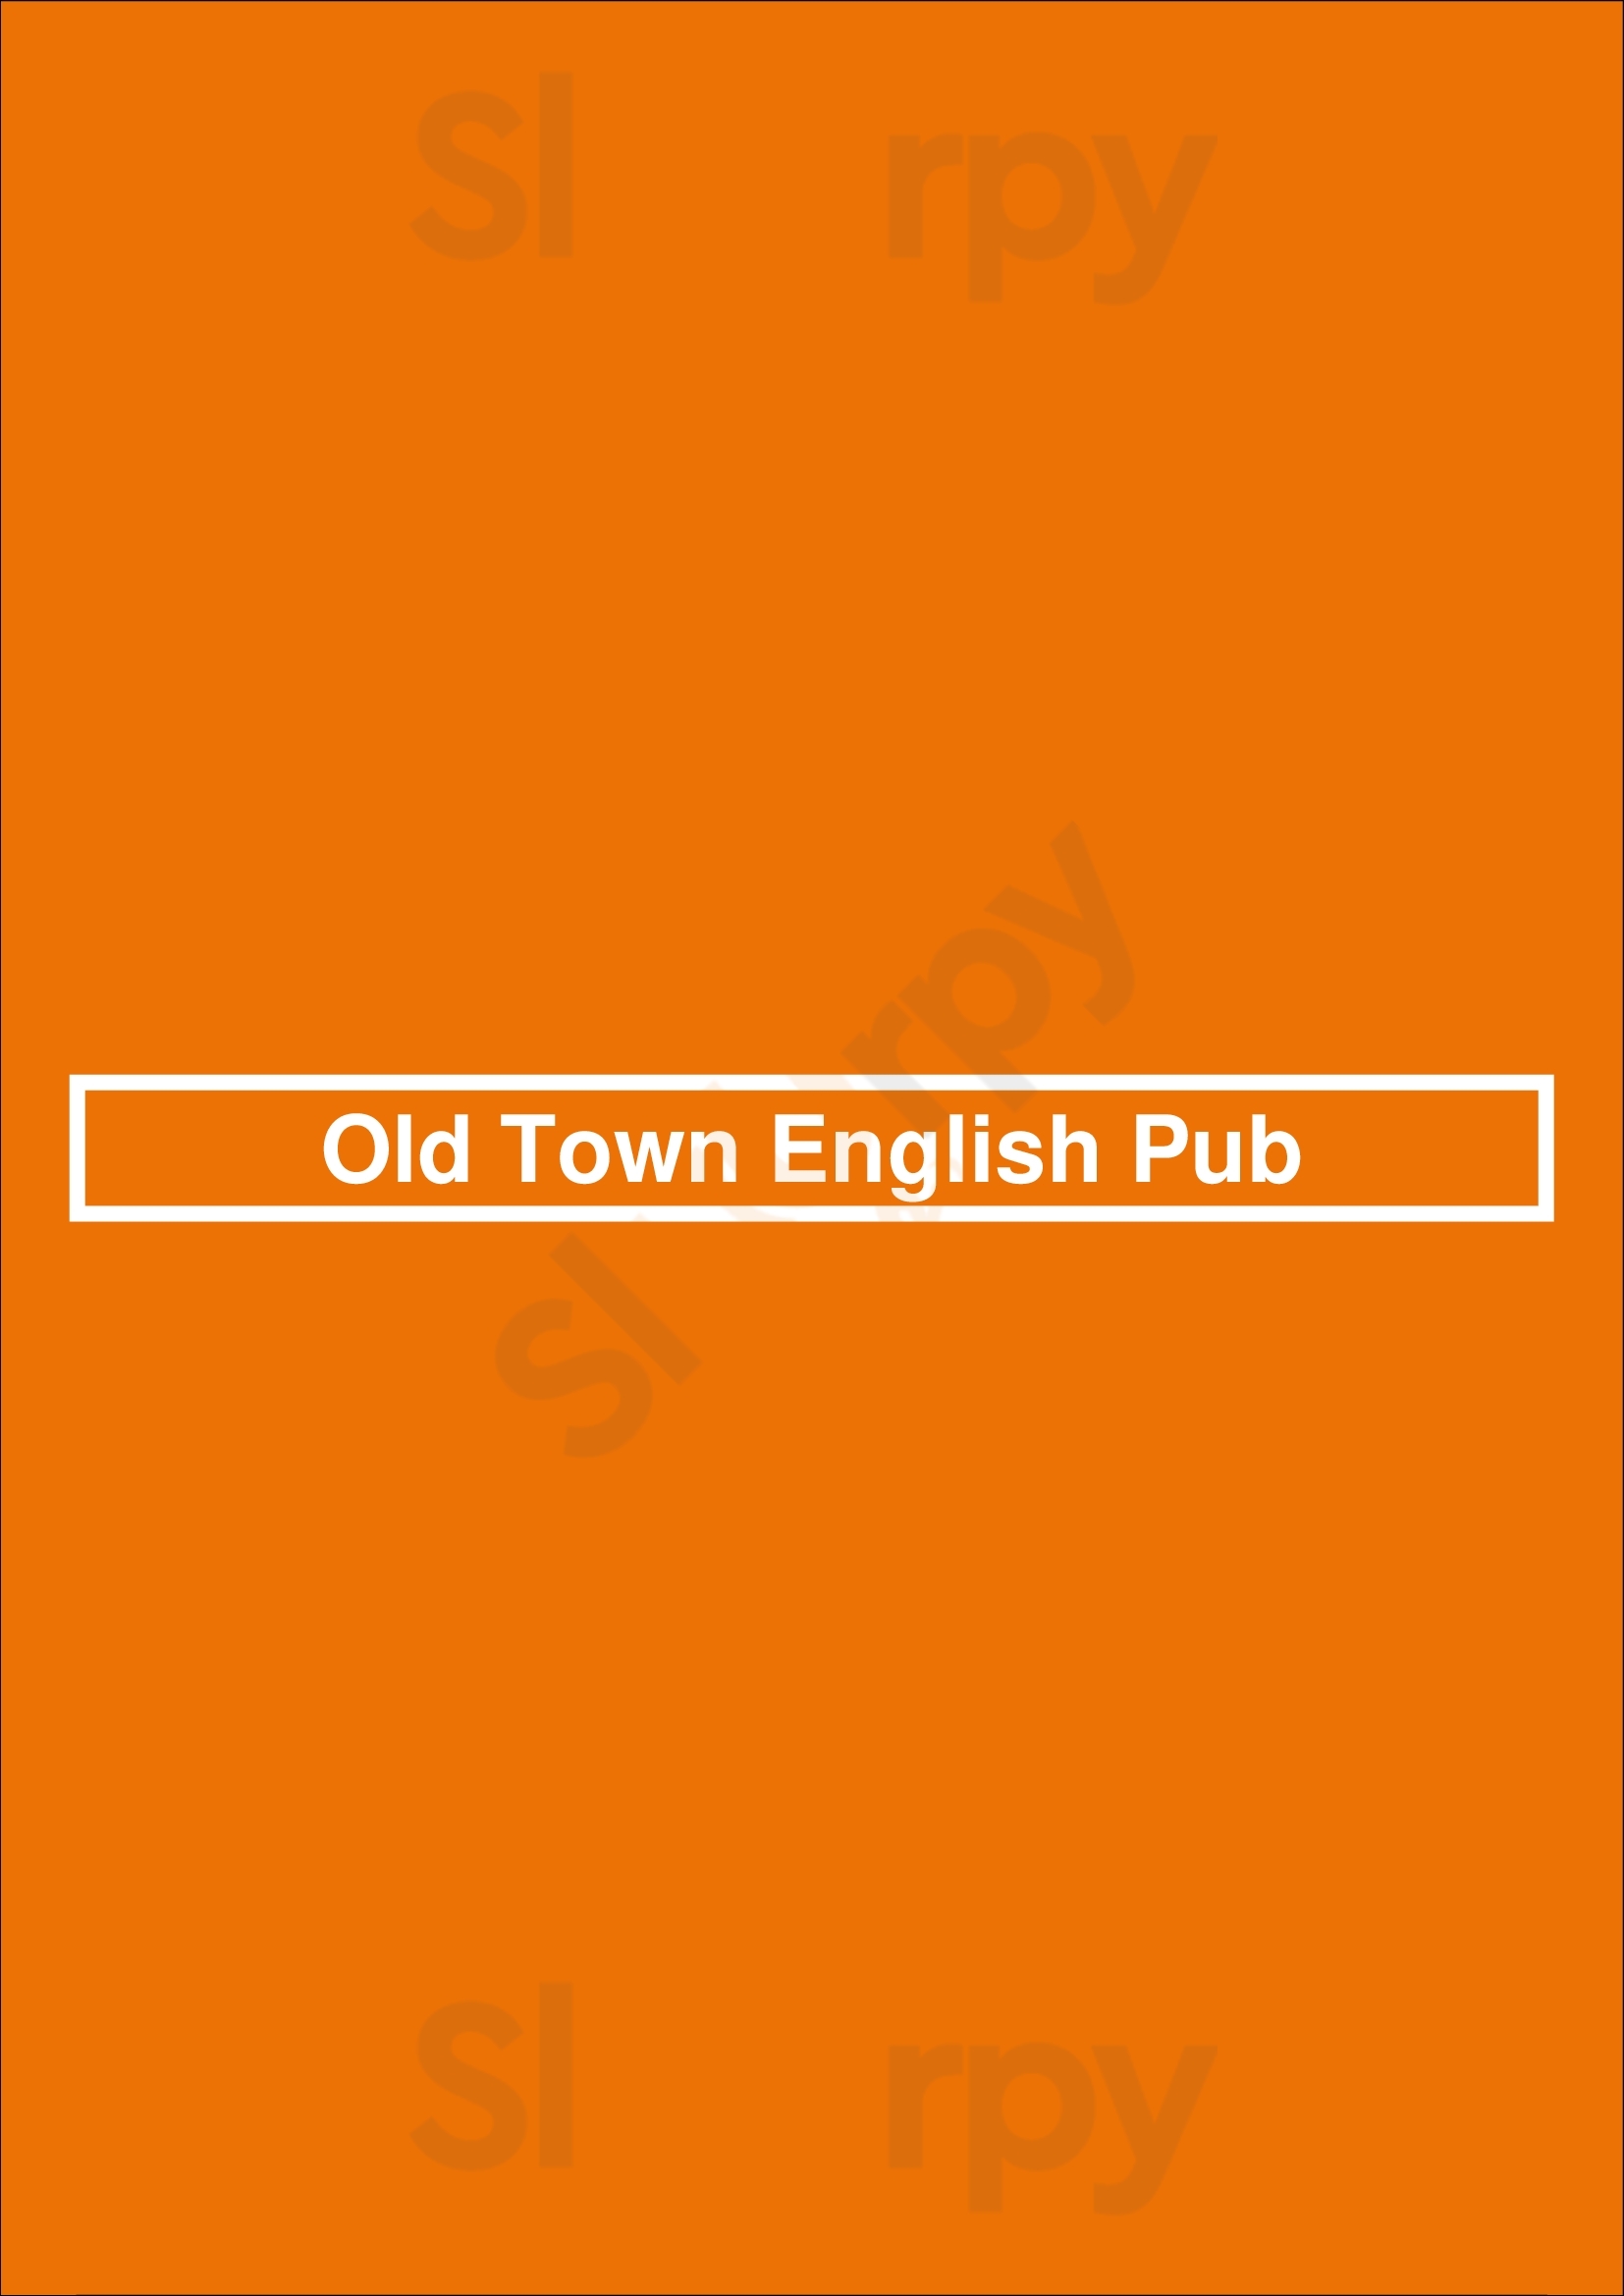 Old Town English Pub Santo André Menu - 1